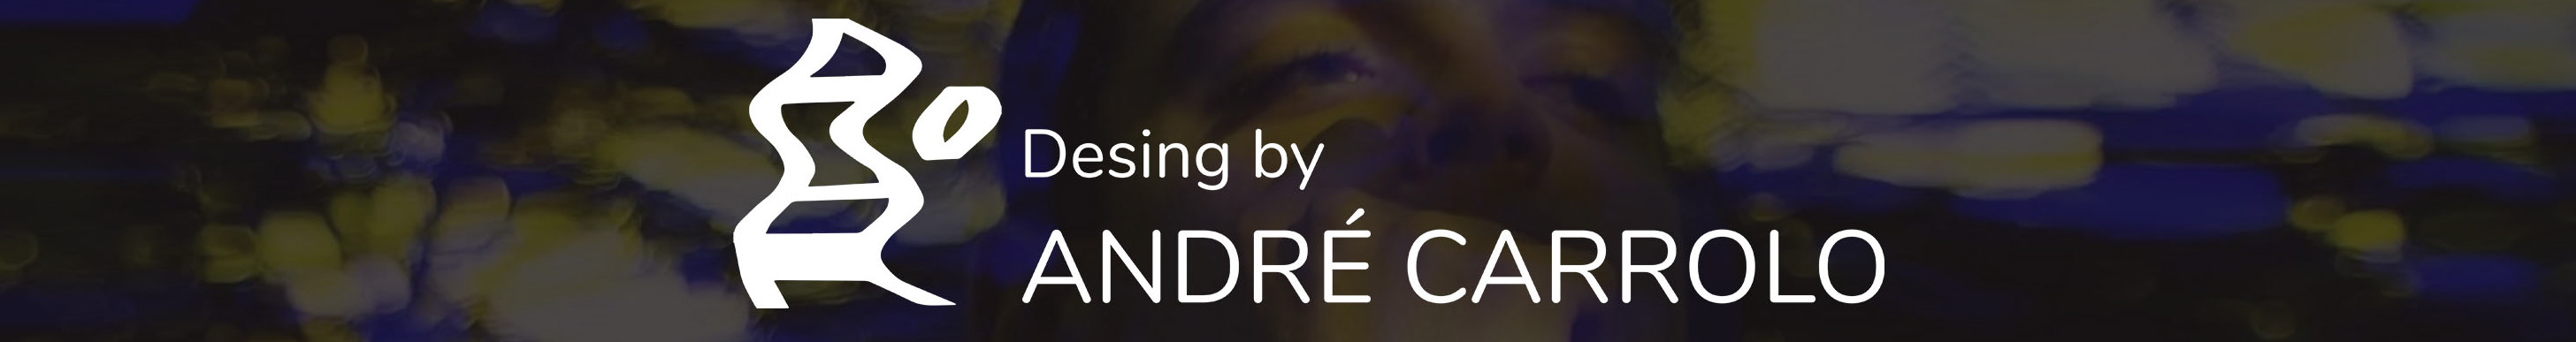 André Carrolo's profile banner